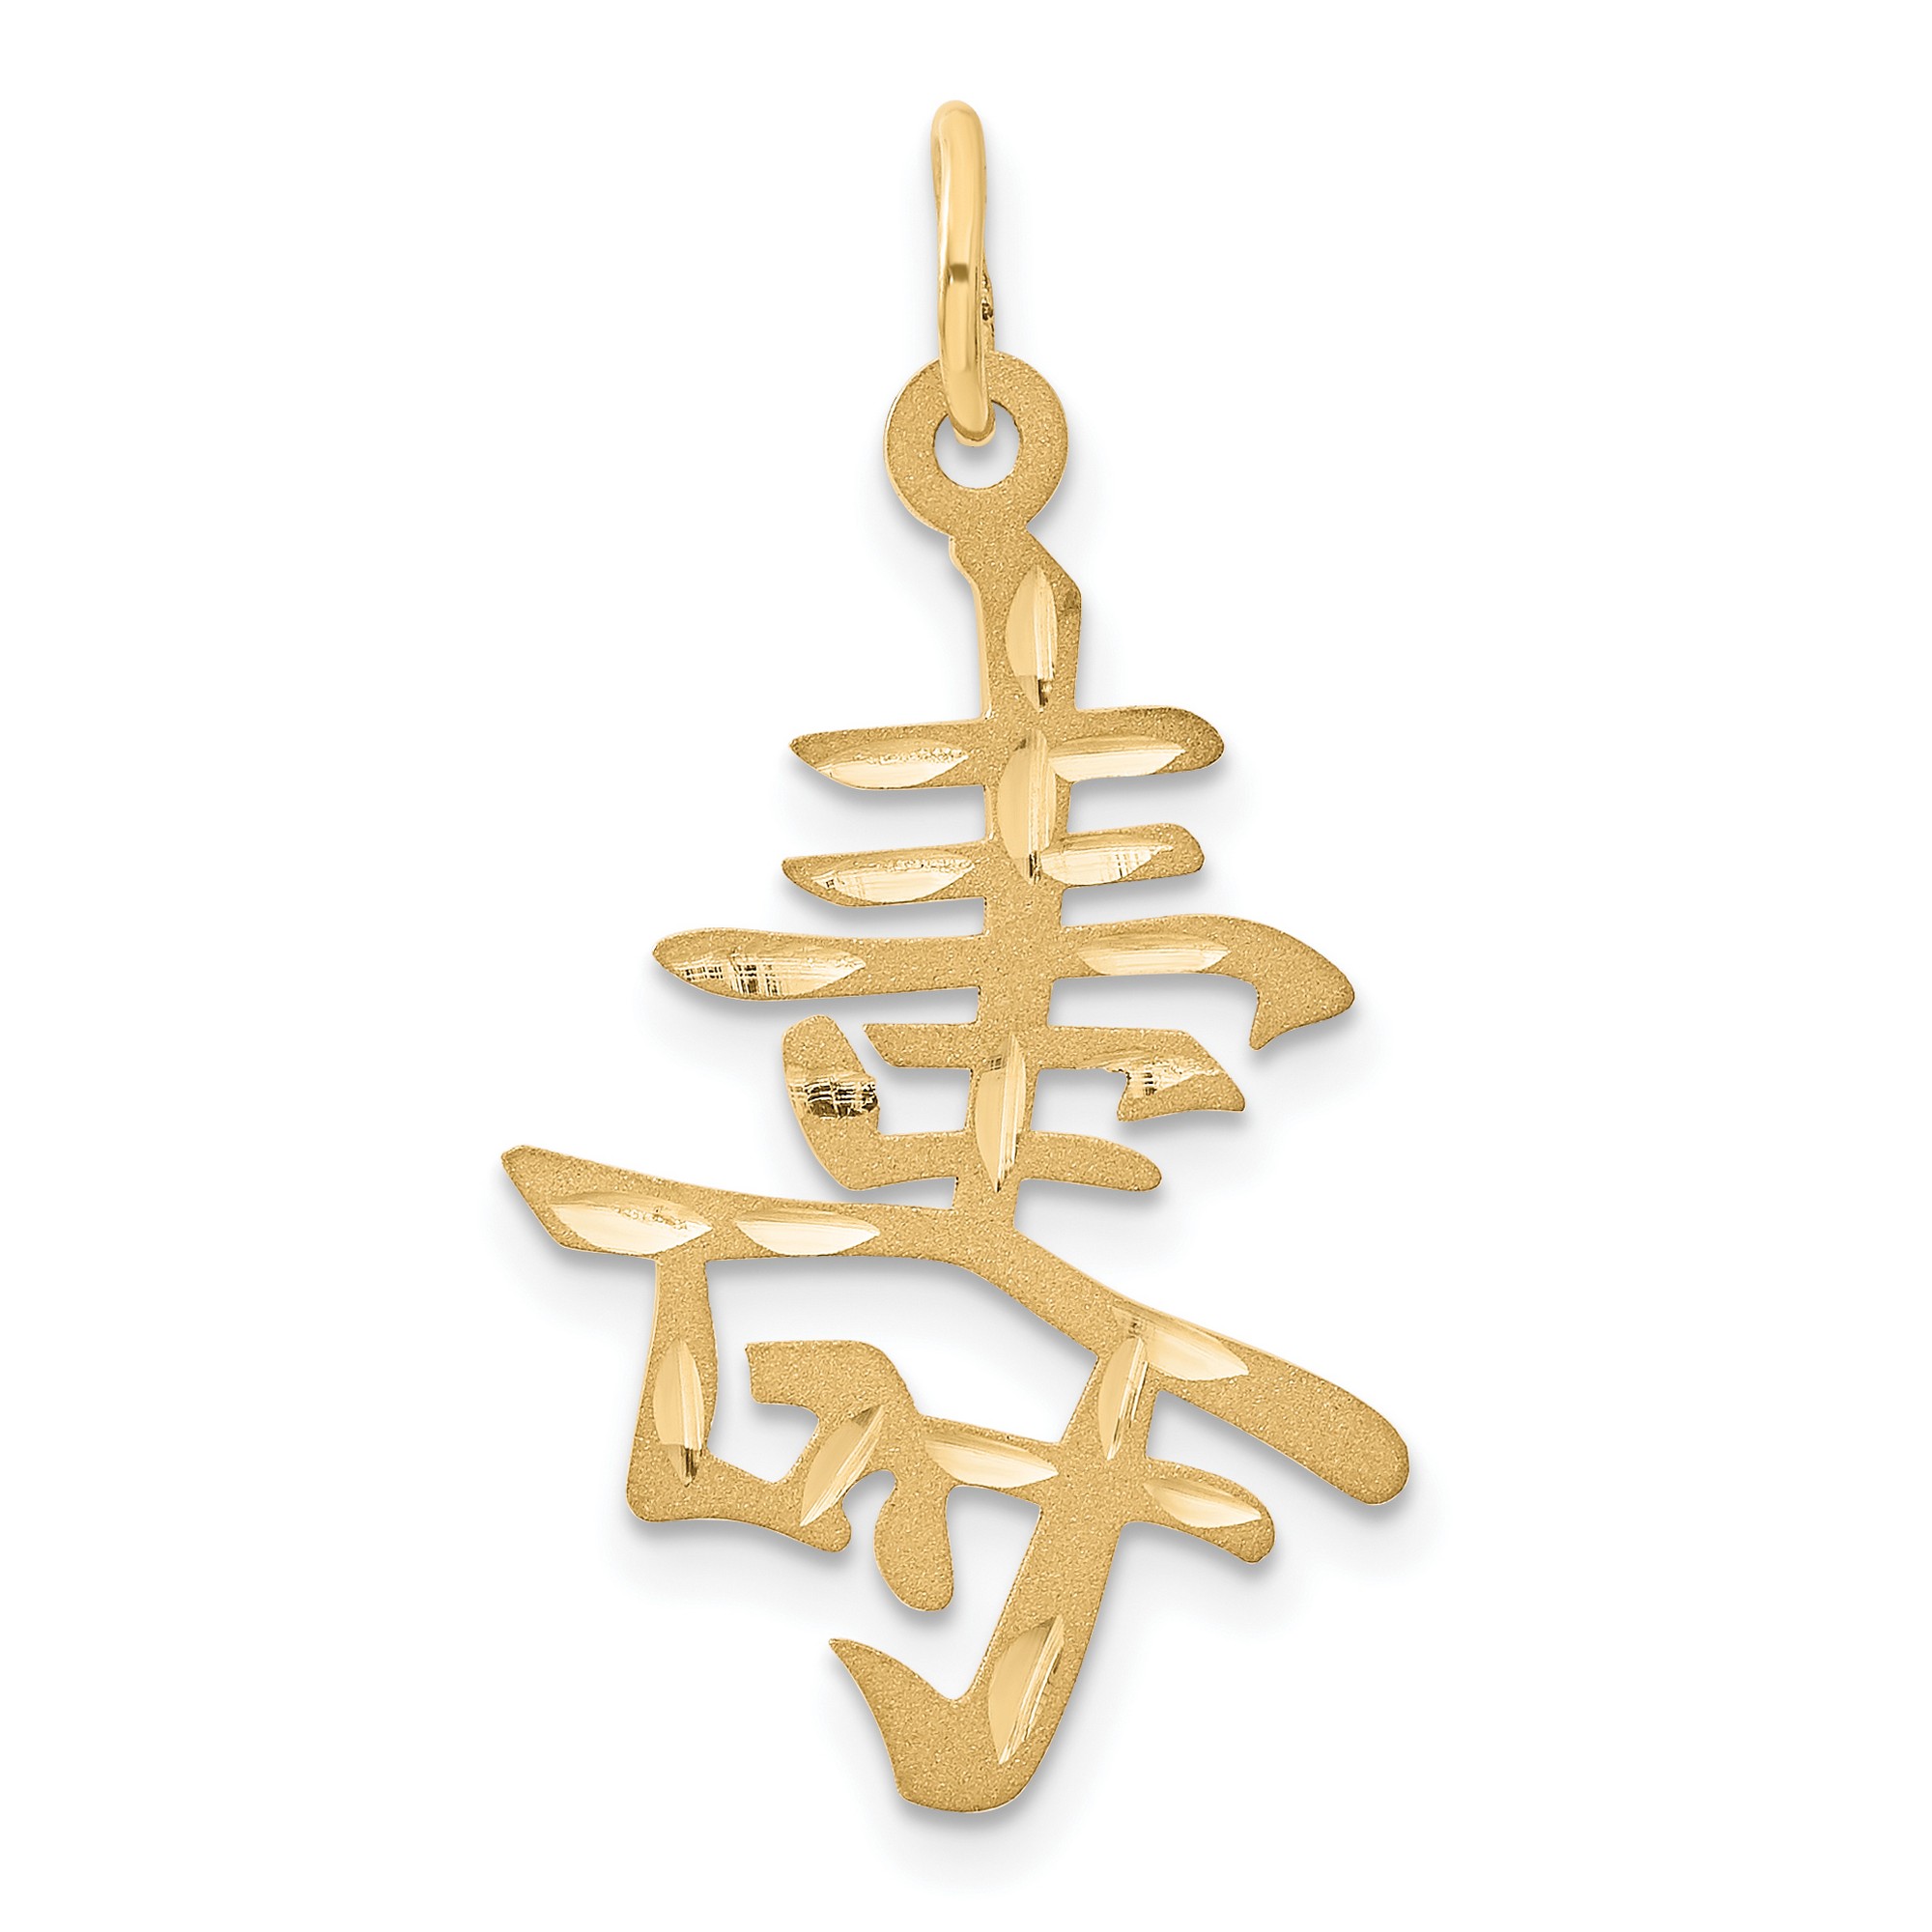 14K Yellow Gold Chinese Long Life Symbol Charm Pendant 30 mm x 17 mm 0